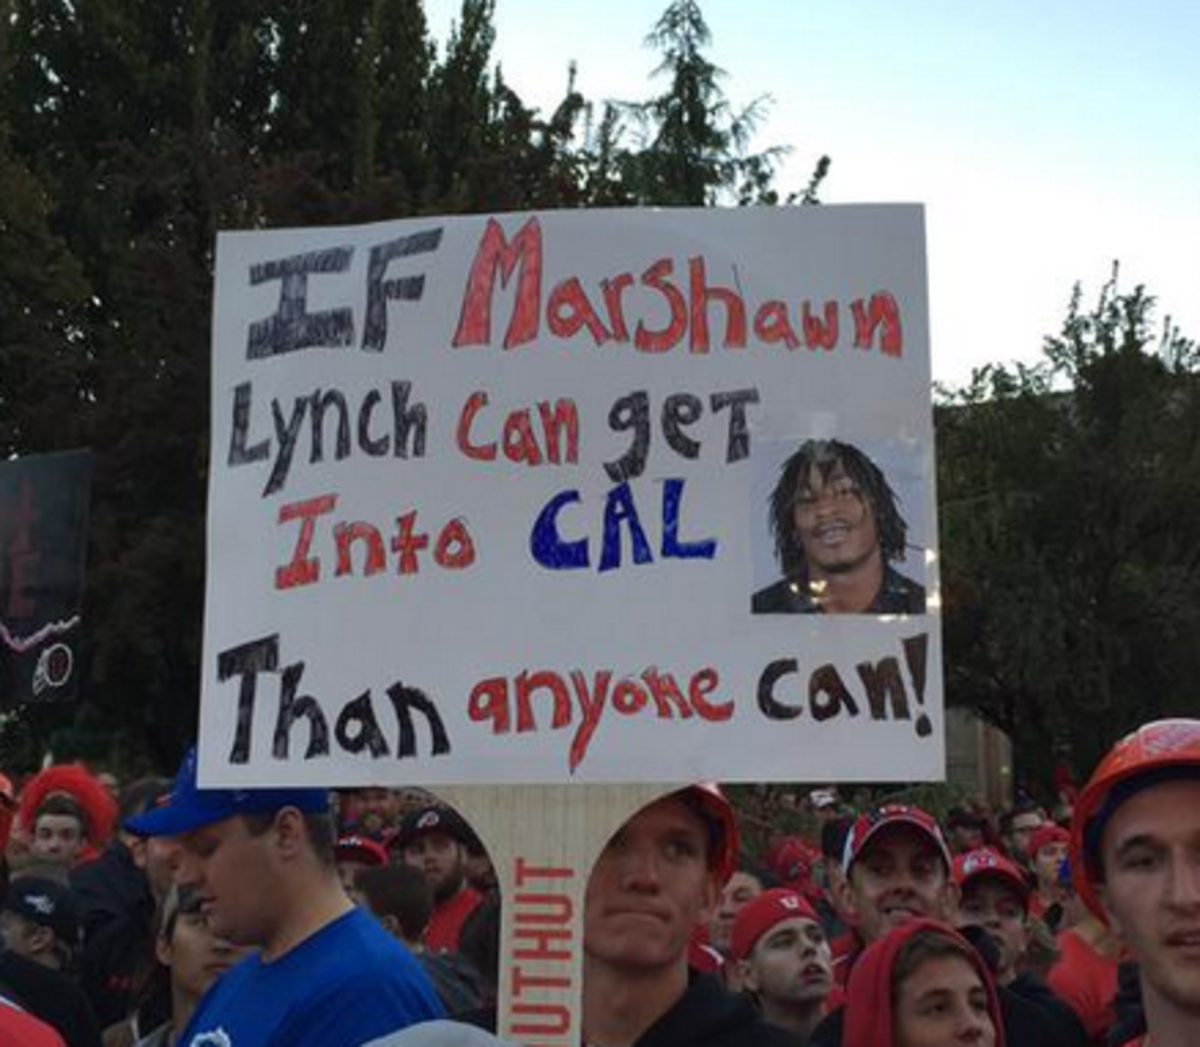 Utah fan makes fun of Cal saying "if Marshawn Lynch can get into Cal than anyone can".